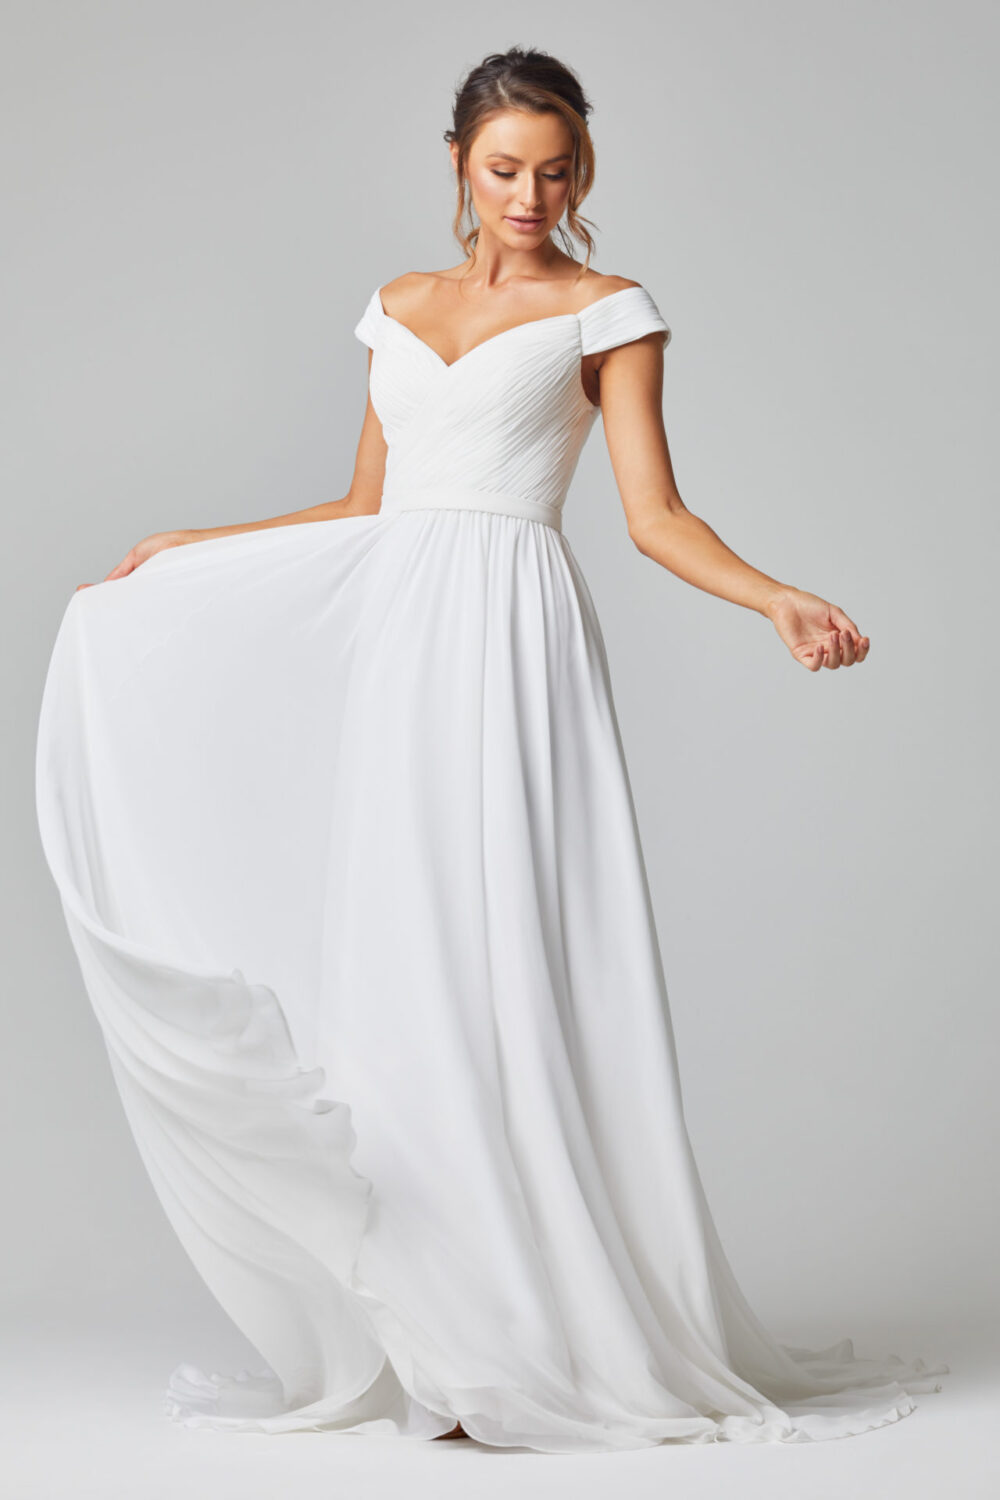 ANNABELLE TC323 Wedding Dresses dress by Tania Olsen Designs